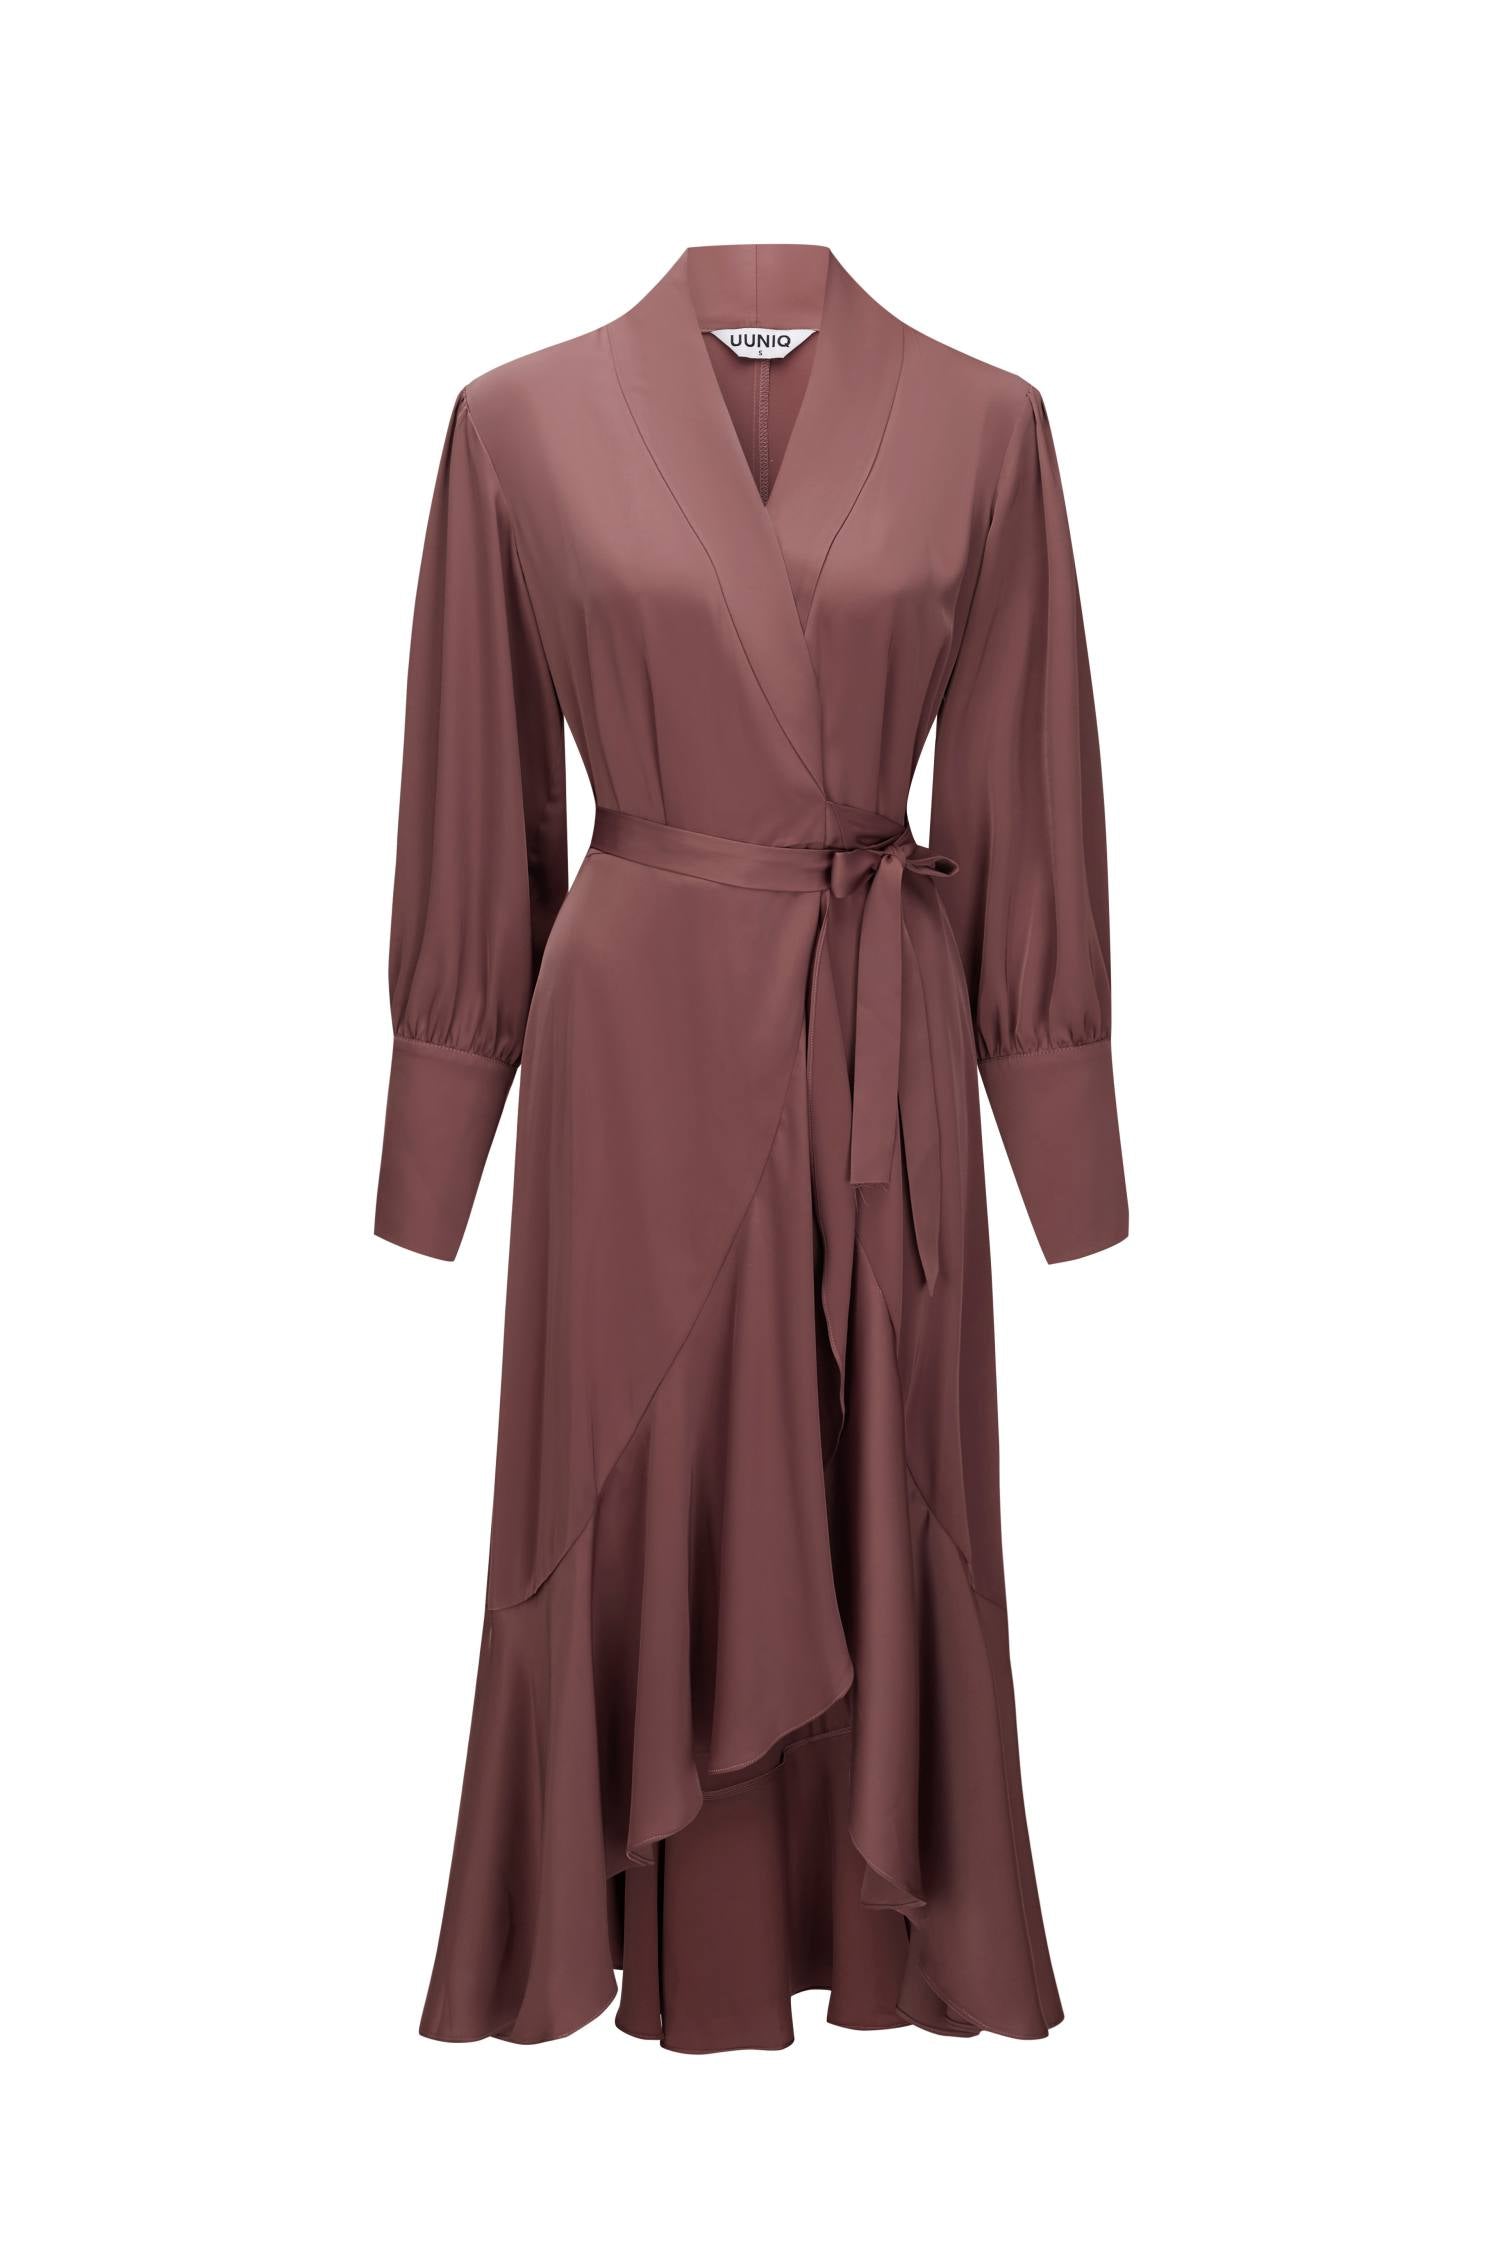 UUNIQ MARIA Maple Wrap Midi Dress With Long Sleeves